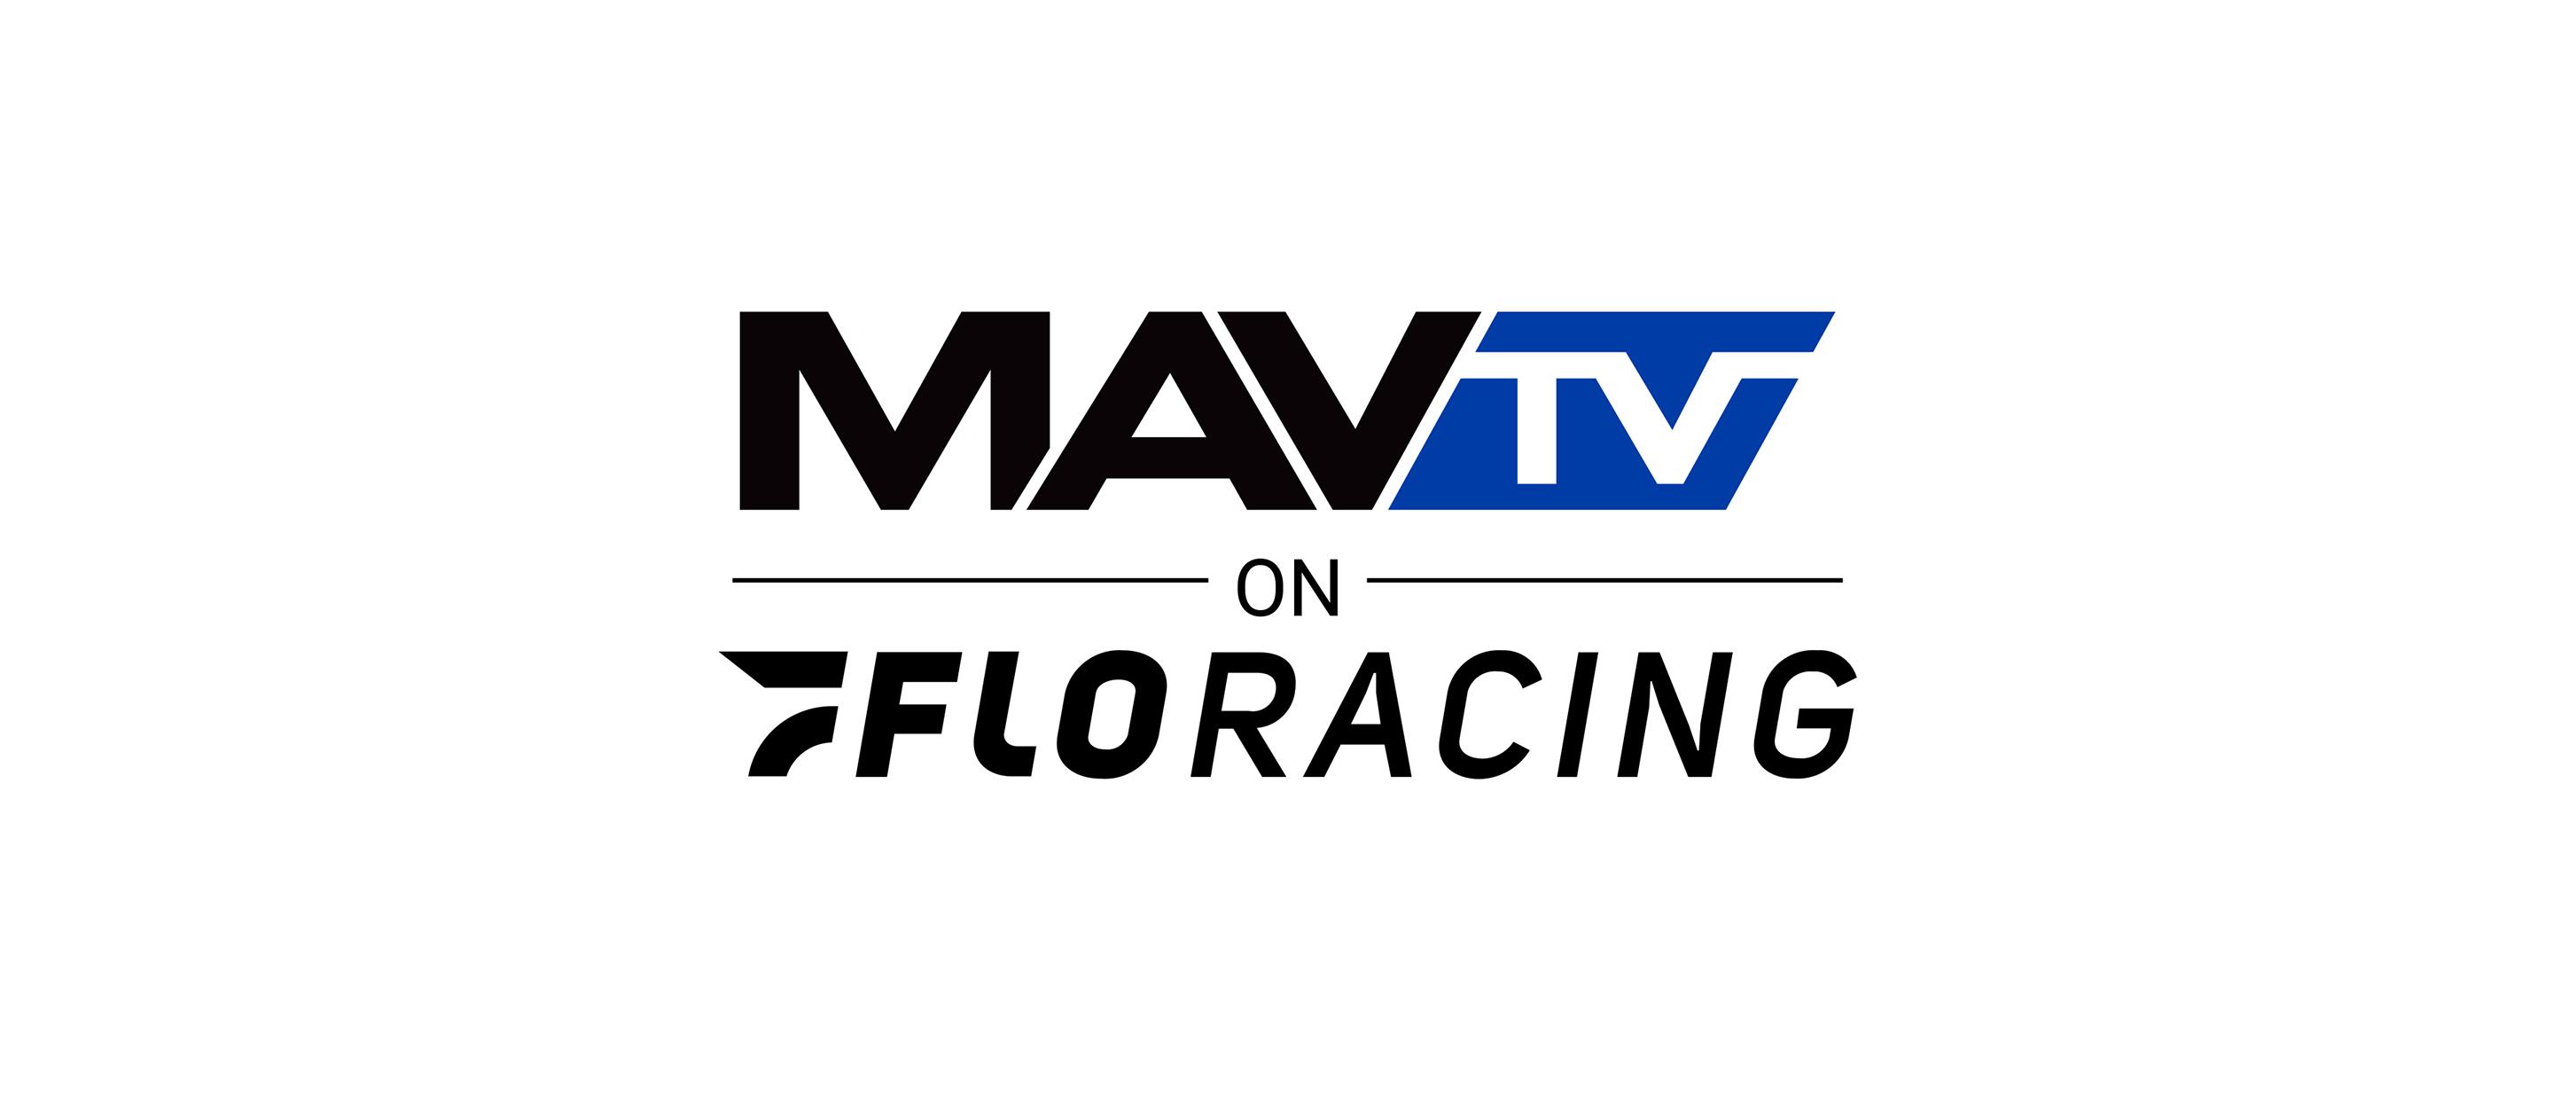 FloSports, MAVTV Announce Live Streaming PartnershipPerformance Racing Industry